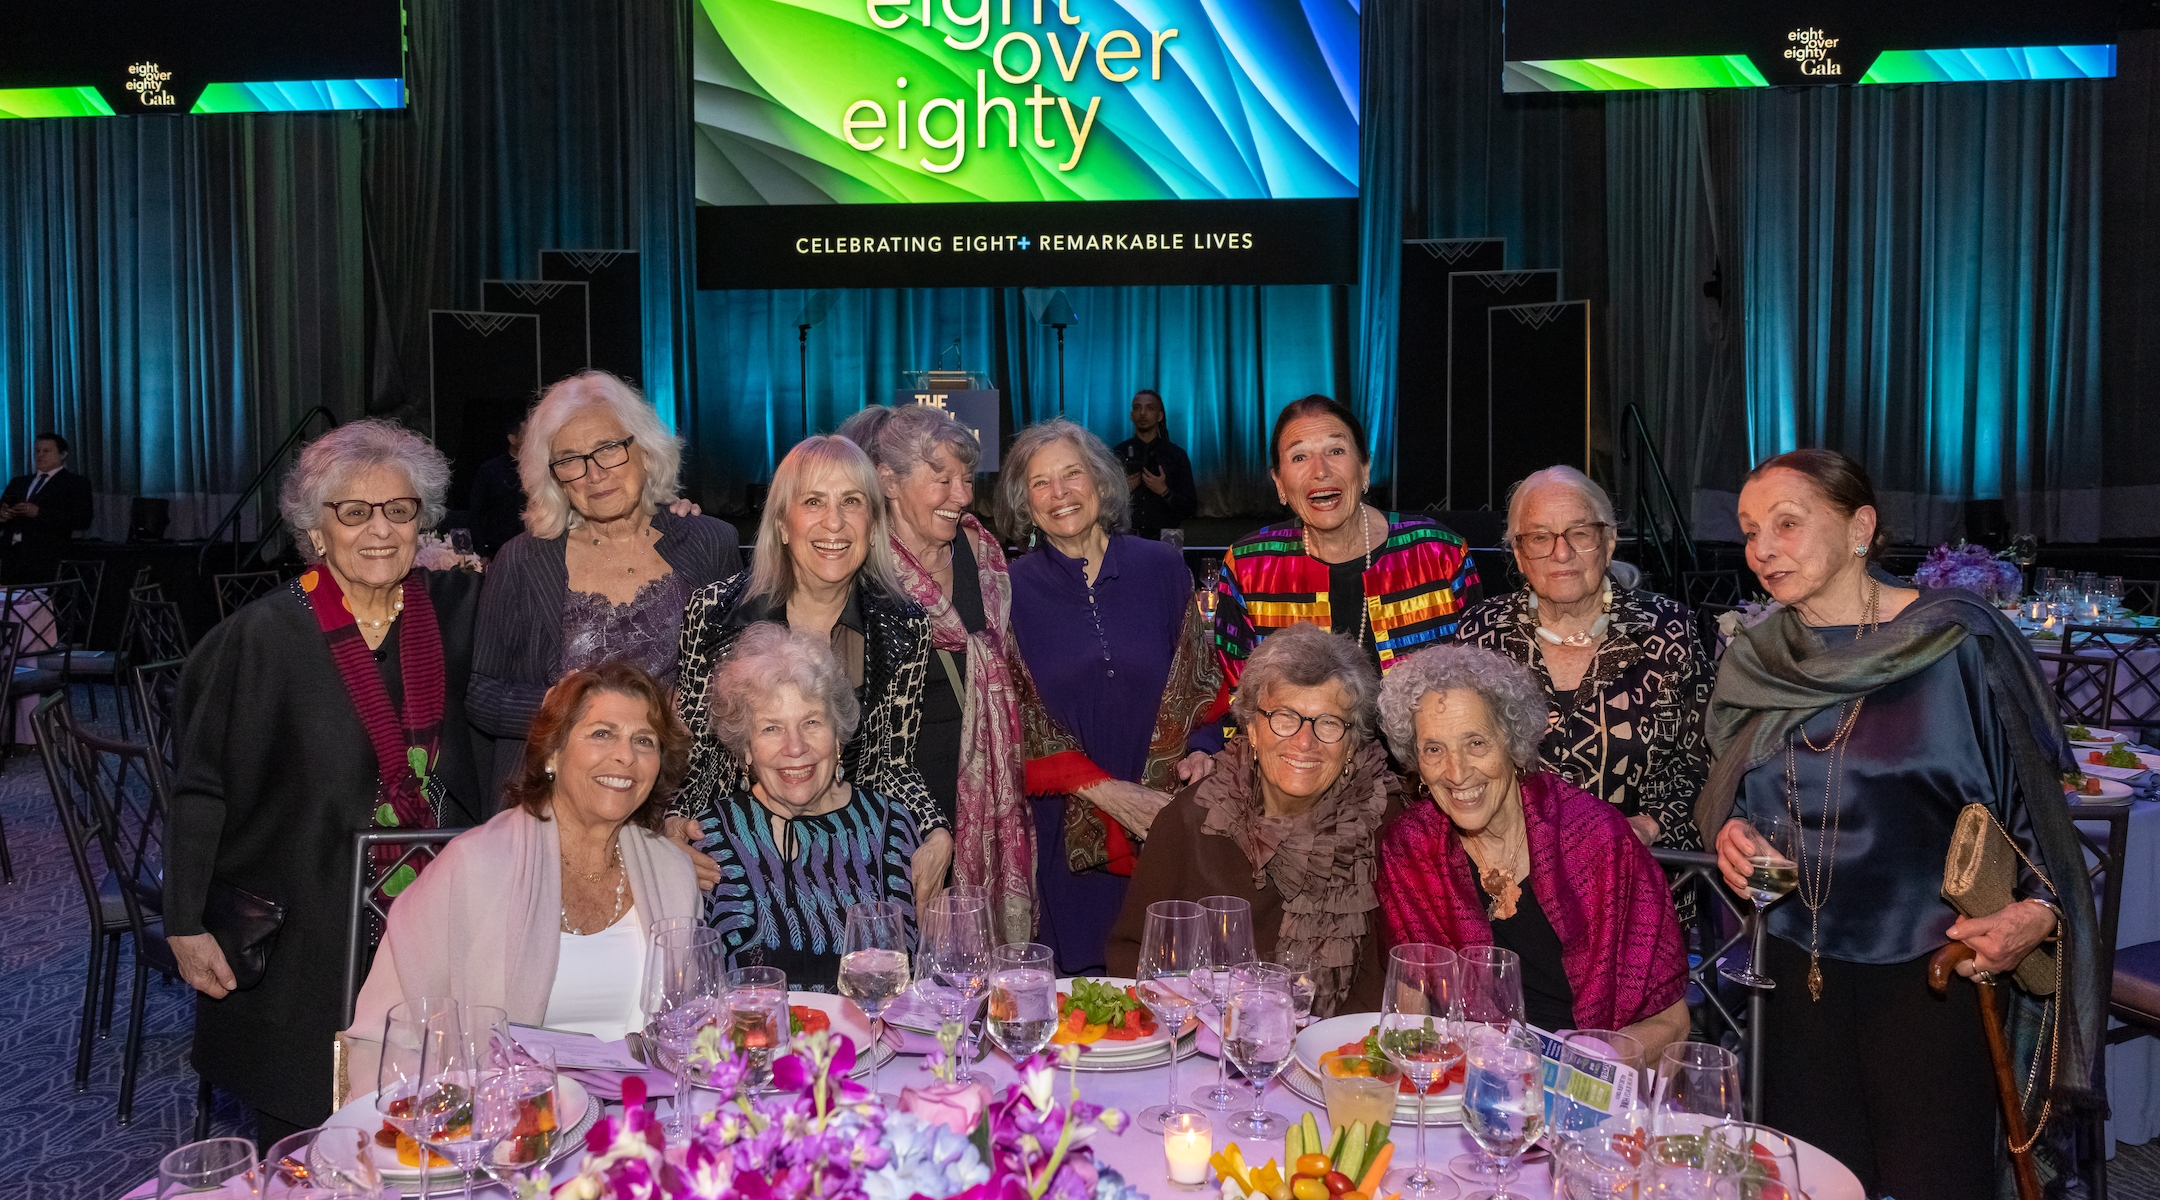 These 12 Jewish feminist trailblazers, all over 80, had dinner together last night